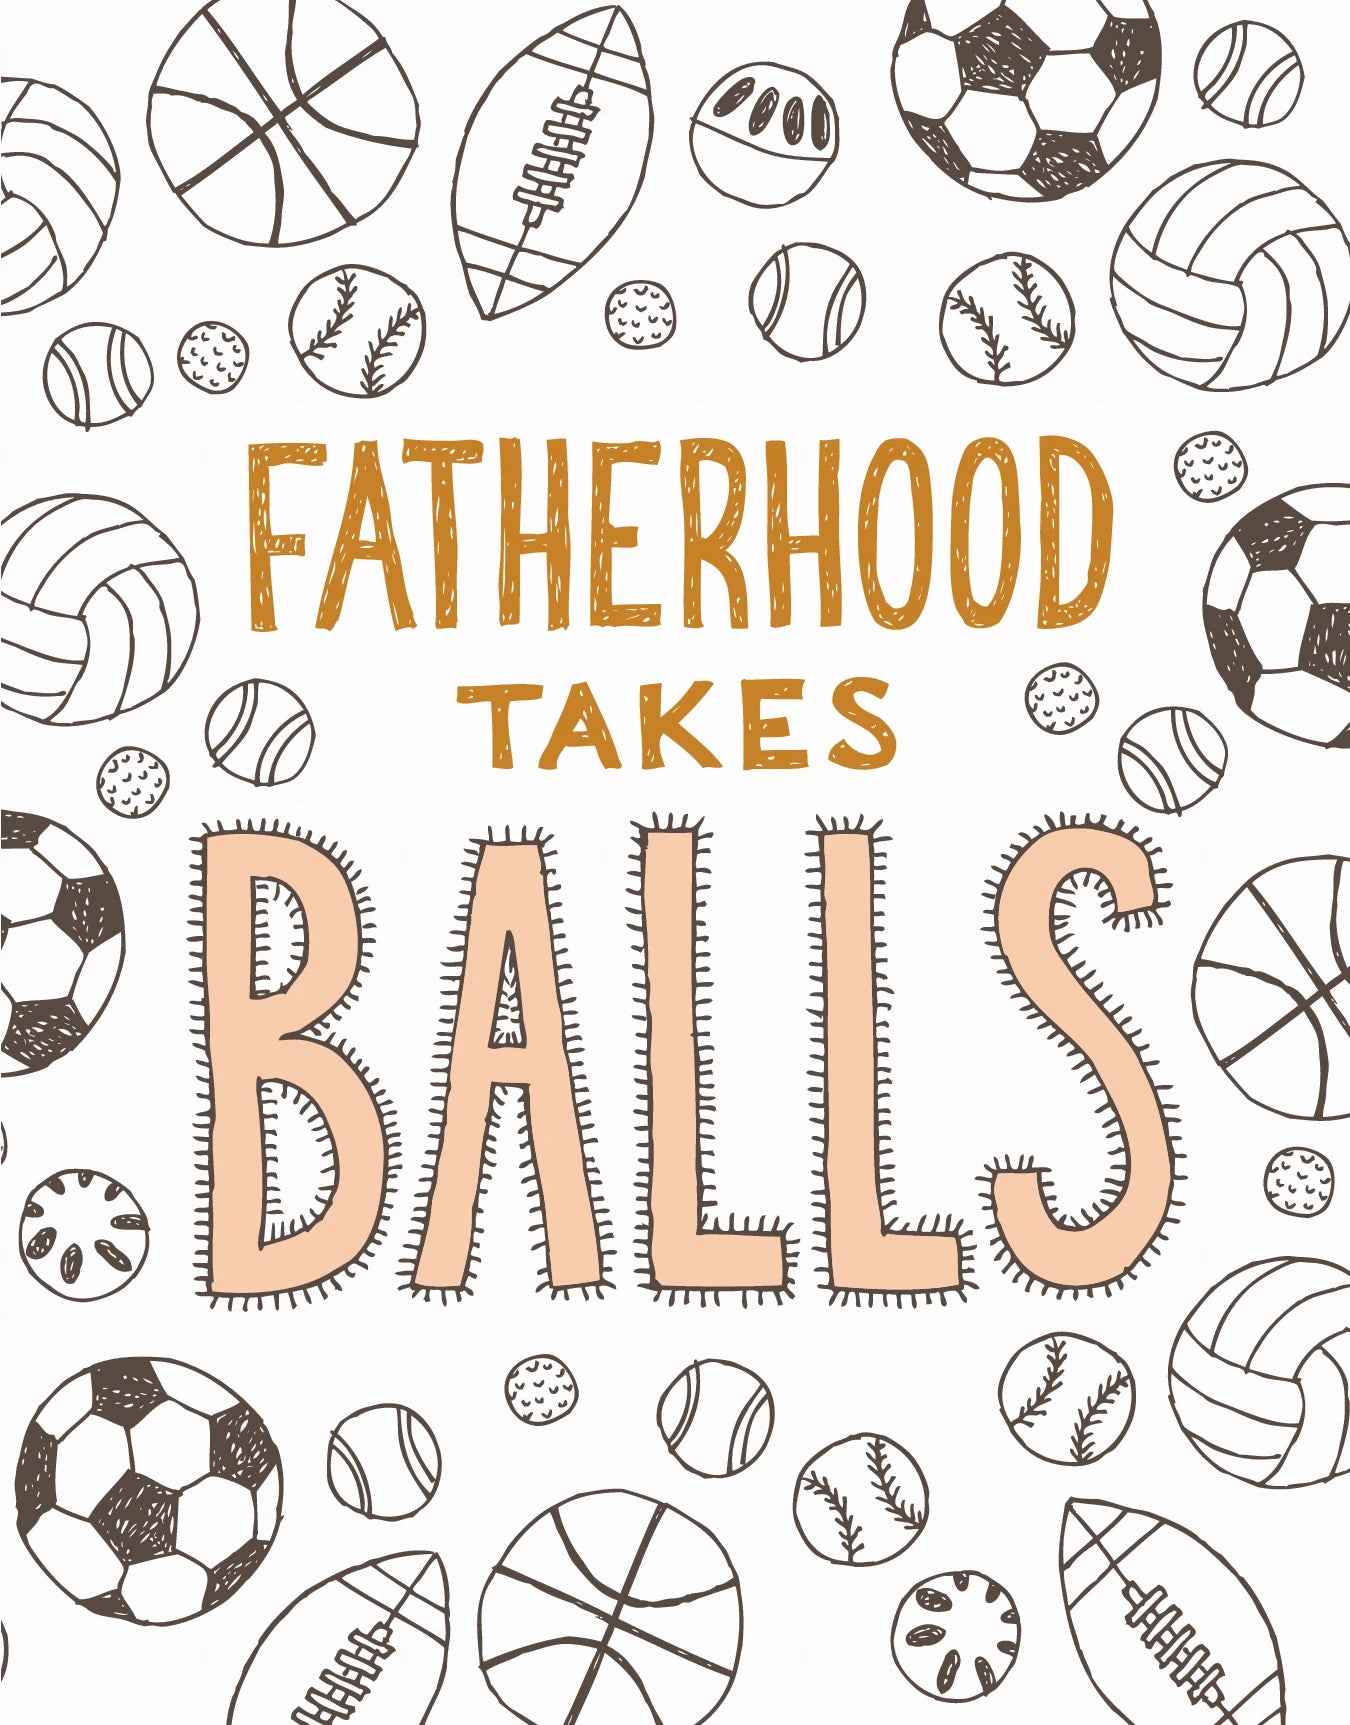 Fatherhood Takes Balls Card